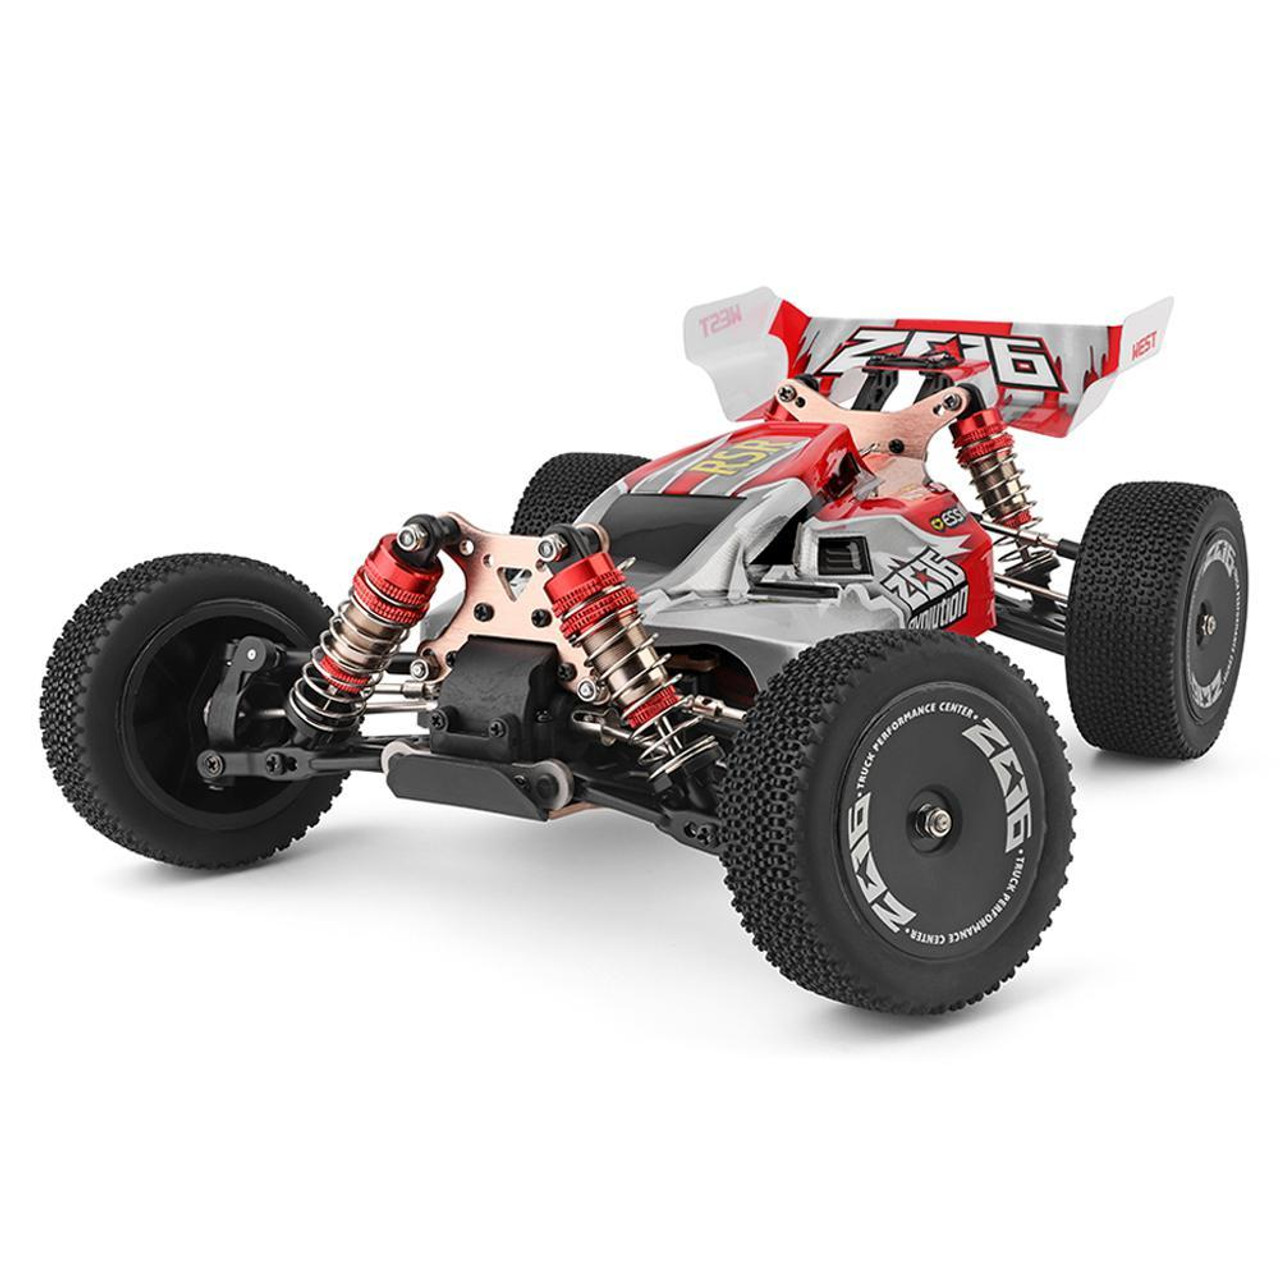 Kayhobbies - Onlineshop für RC Cars - Drift - Crawler - 1/10 LED